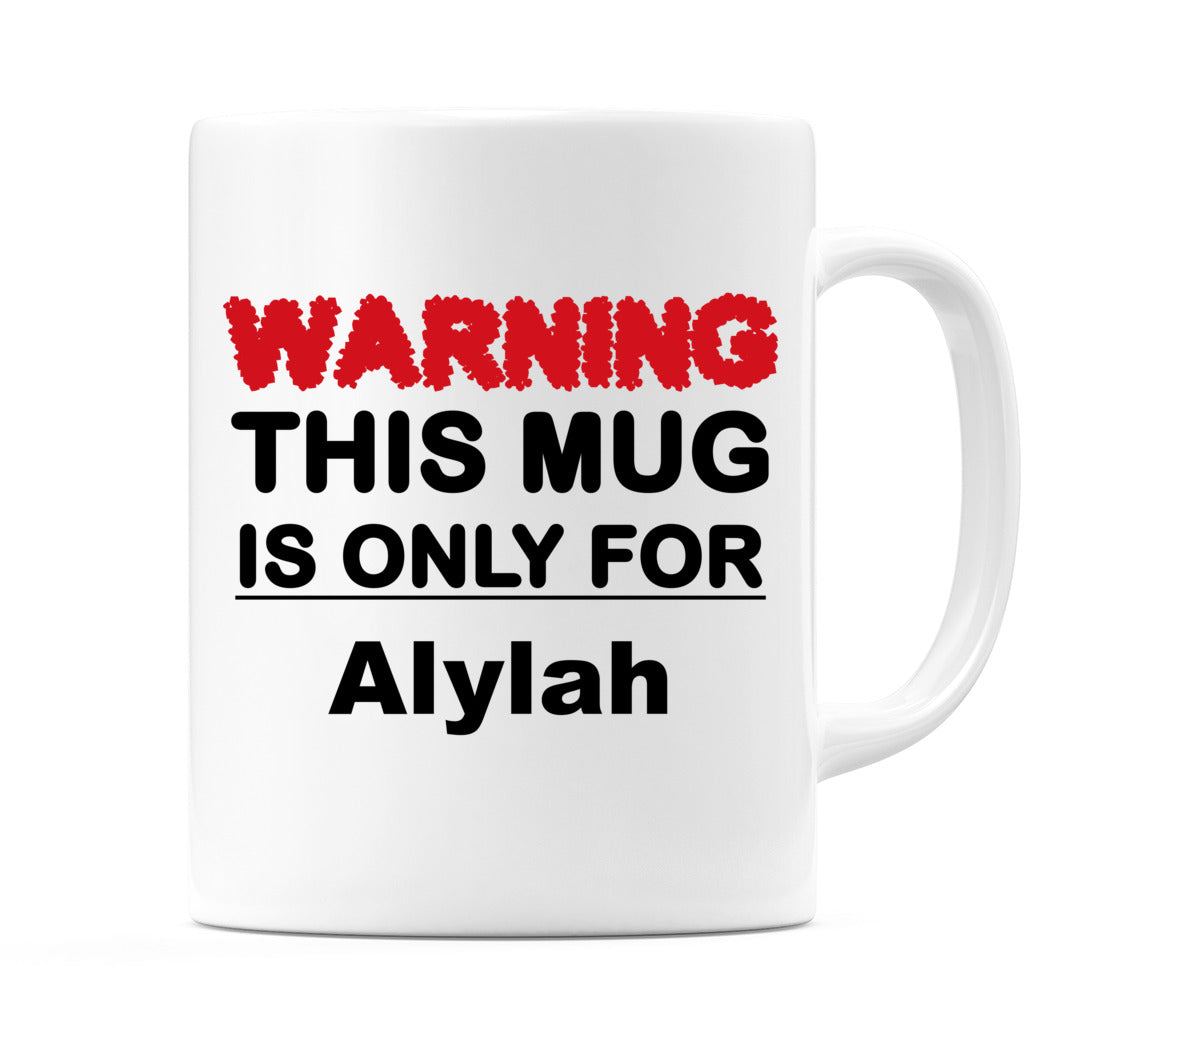 Warning This Mug is ONLY for Alylah Mug